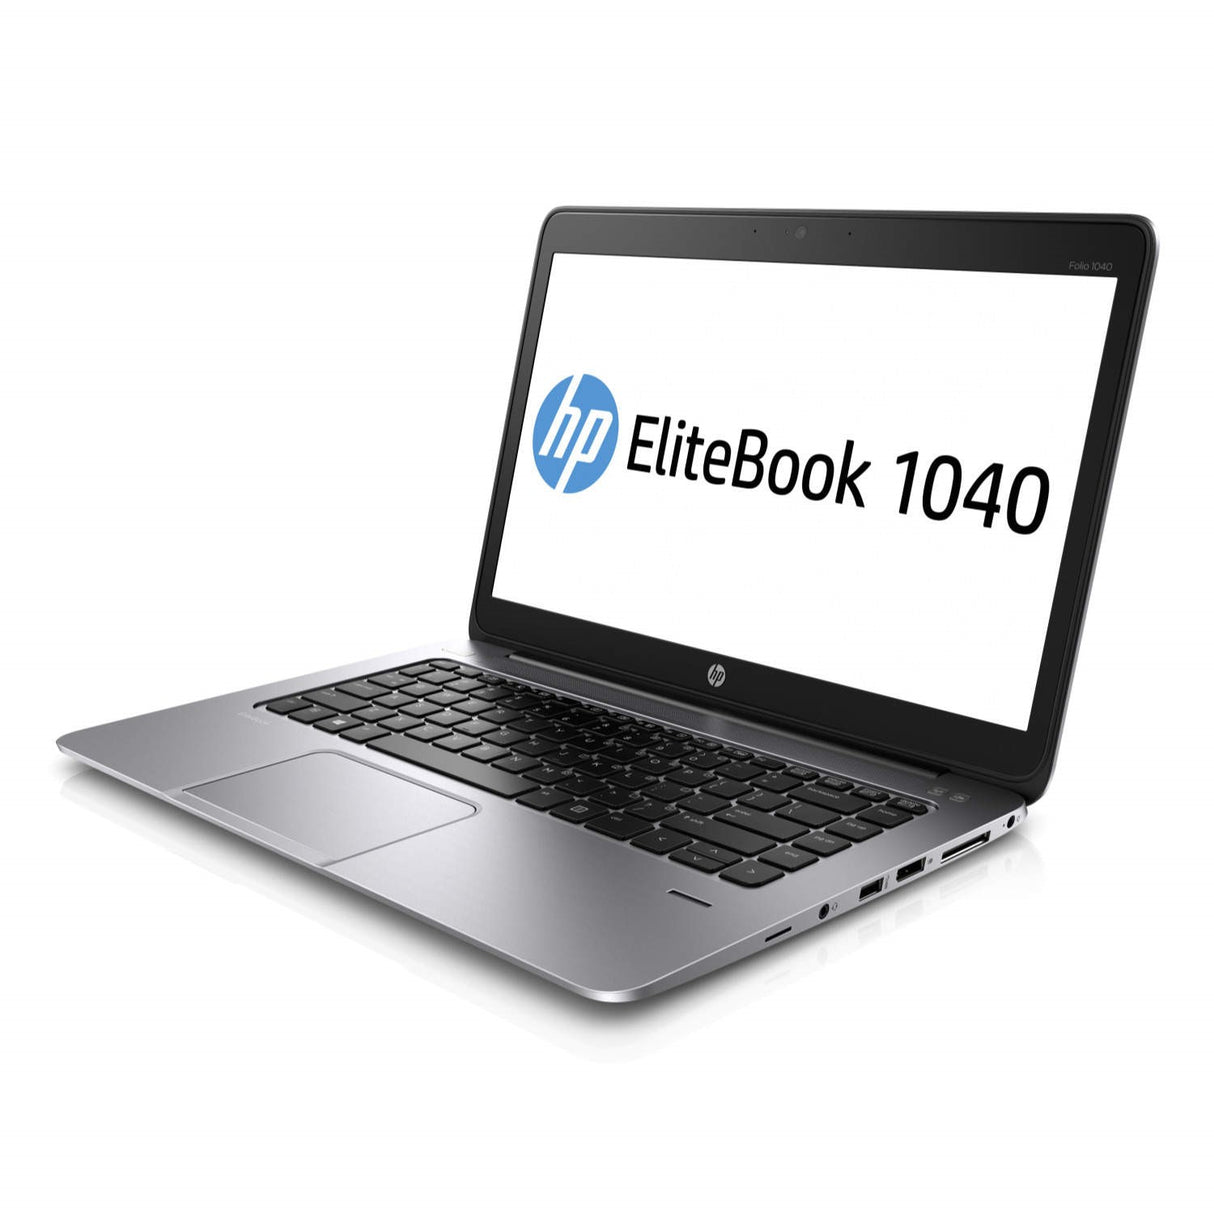 HP EliteBook 1040 G1 i5 4th Gen 4GB 180GB Windows 10 Home